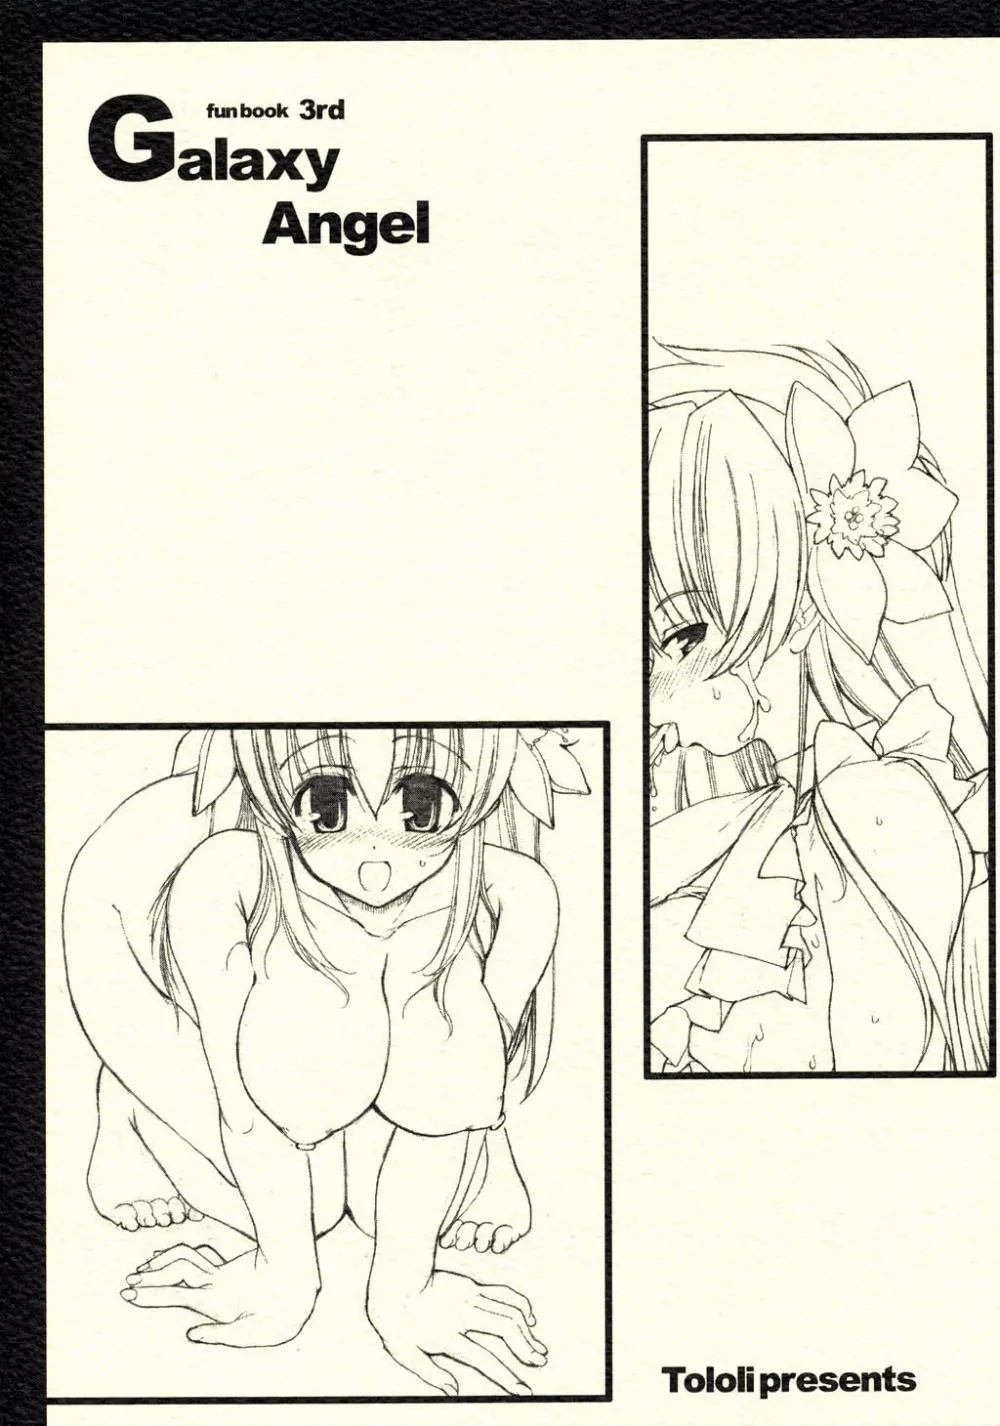 Galaxy Angel fun book 3rd - page1